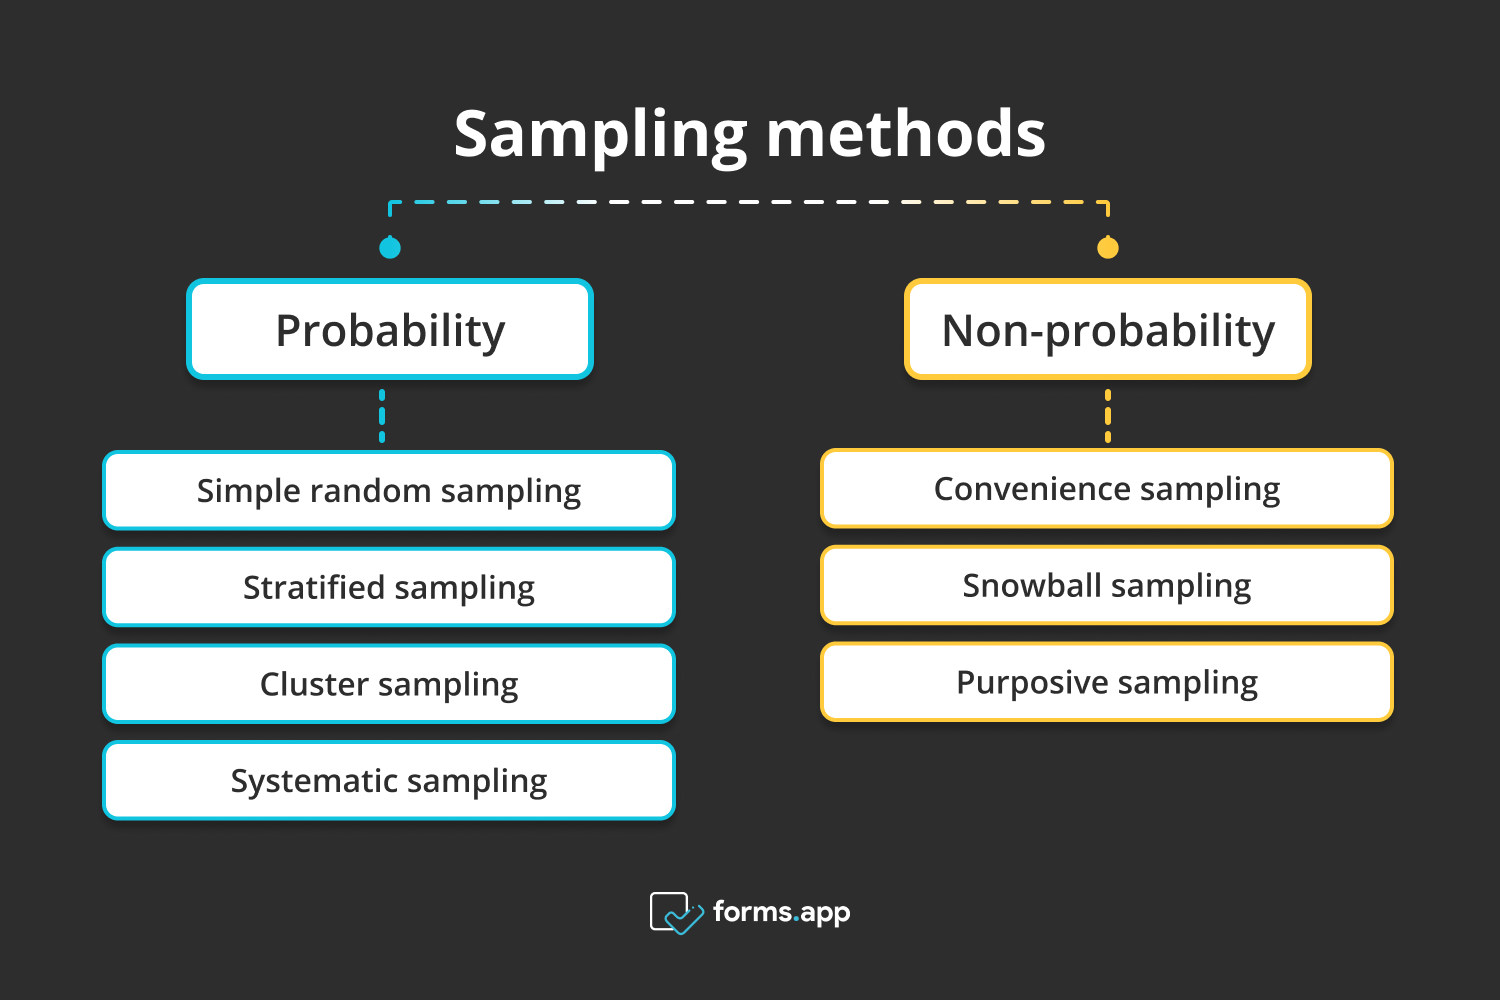 Sampling methodologies